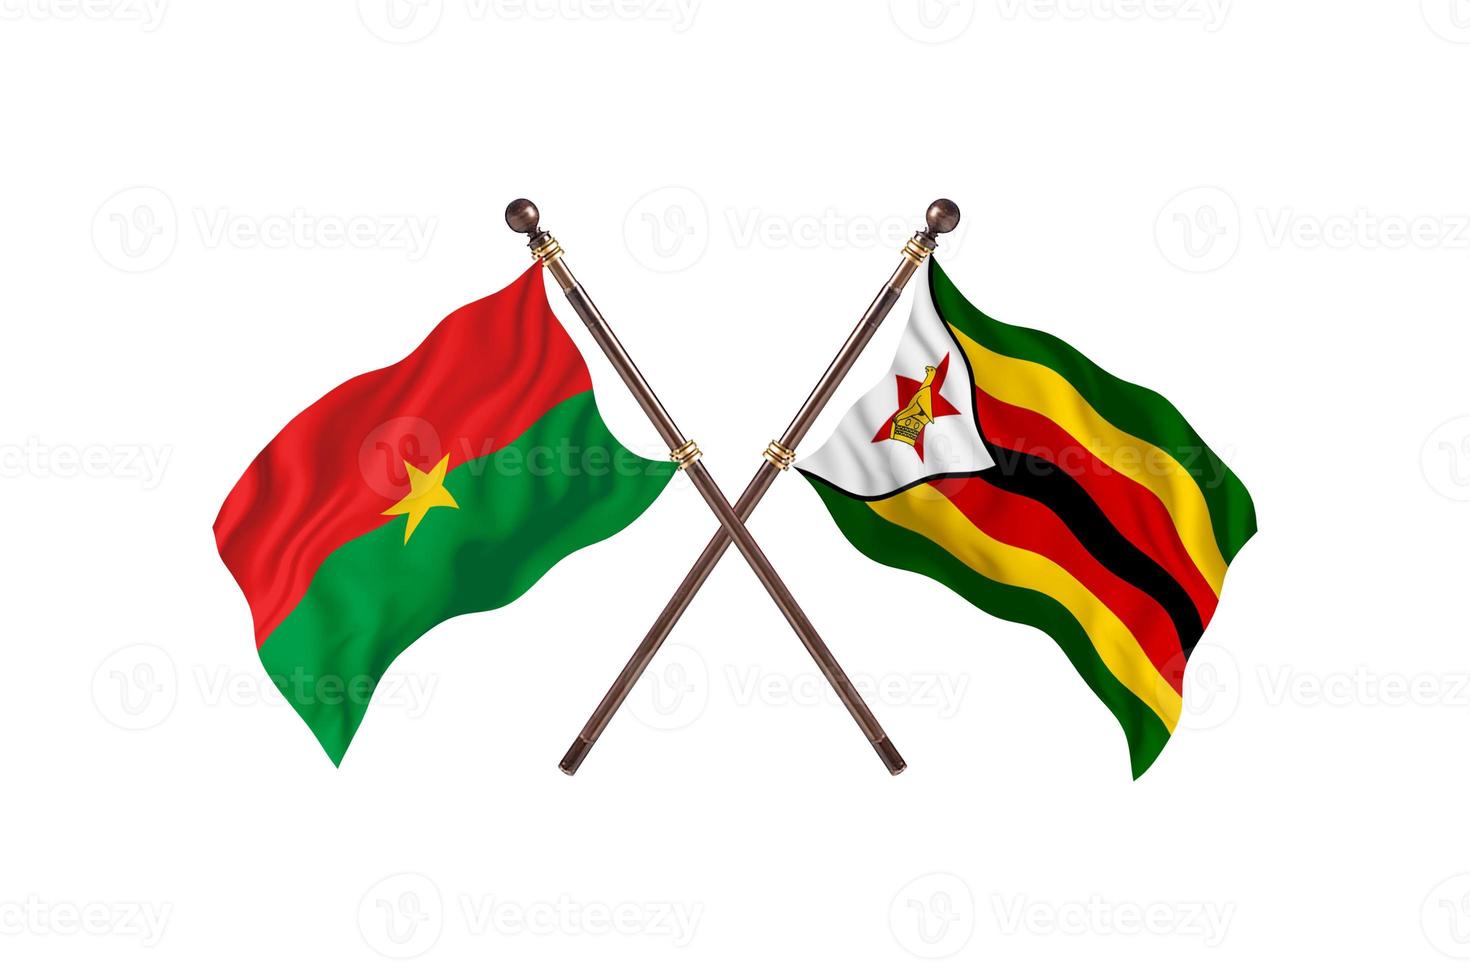 Burkina Faso versus Zimbabwe Two Country Flags photo